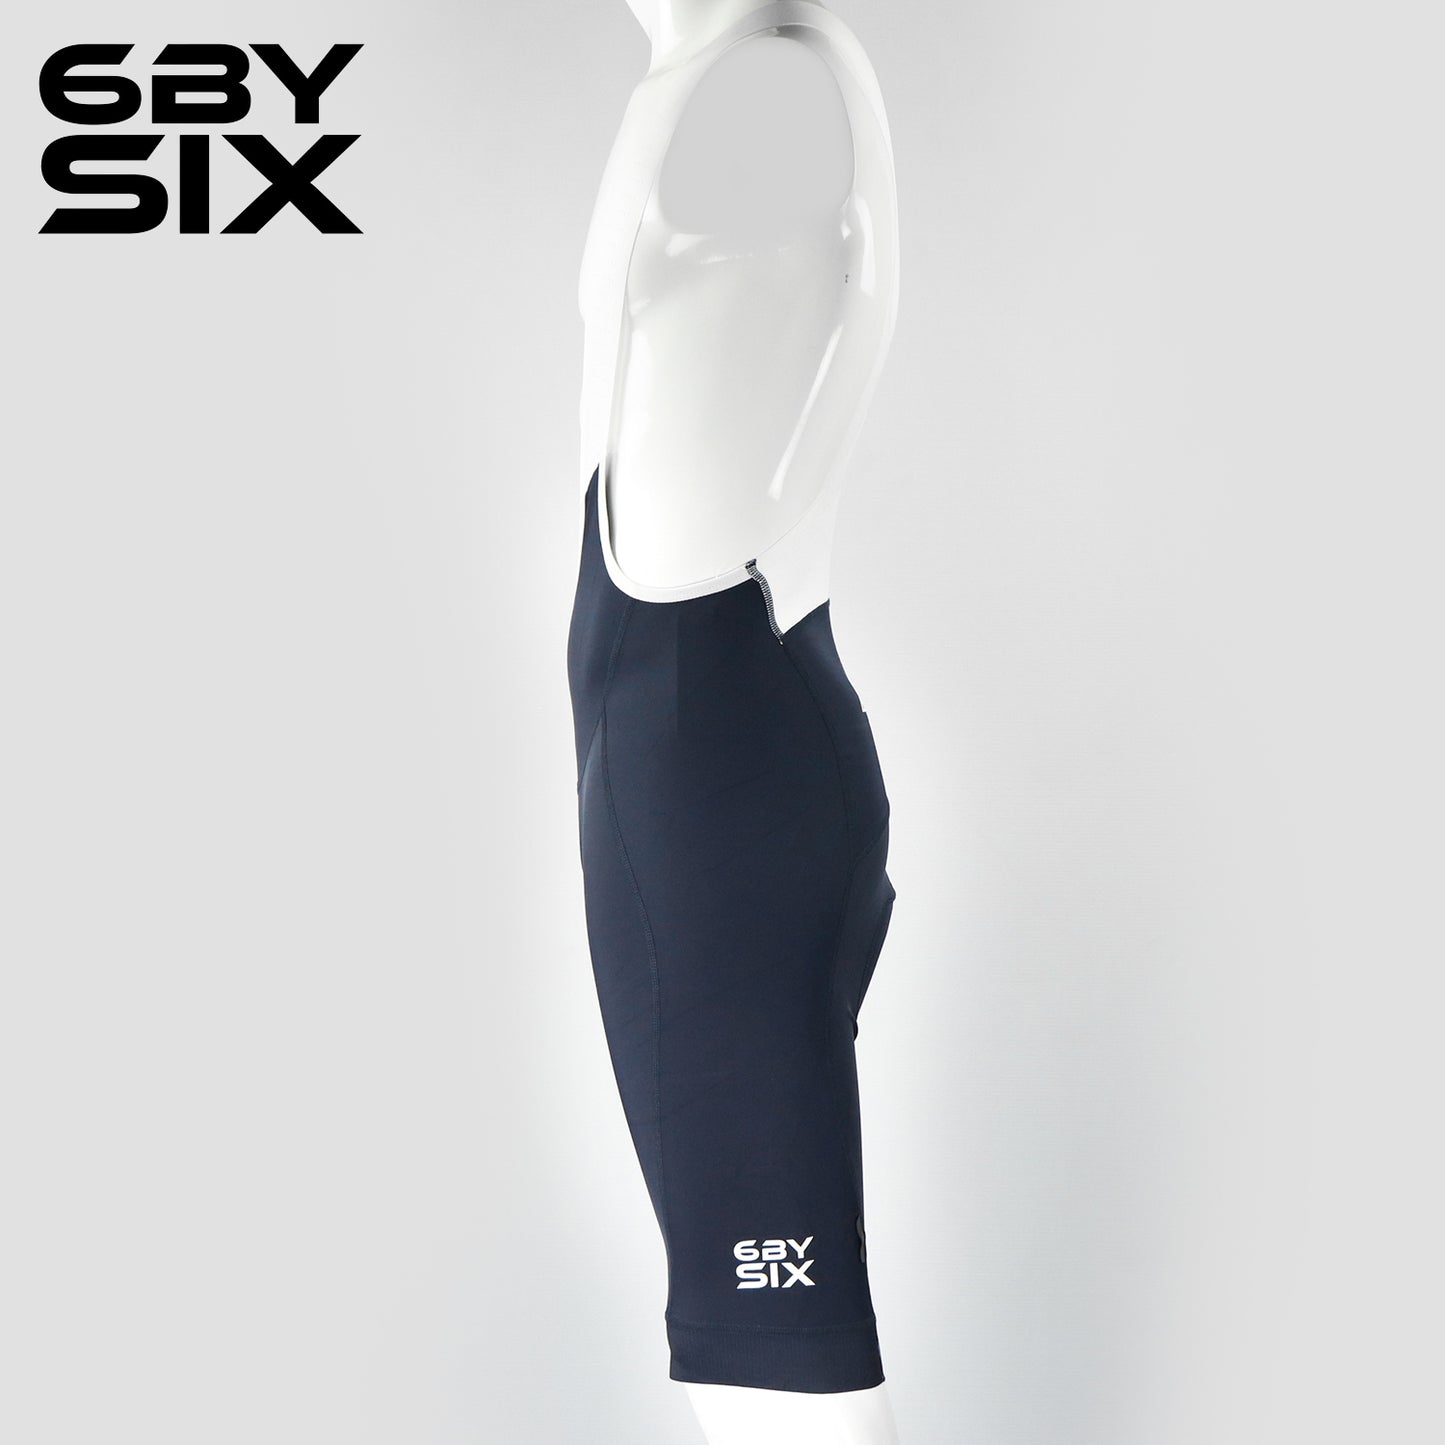 6bySix Adaptive Bib Shorts - Navy Blue